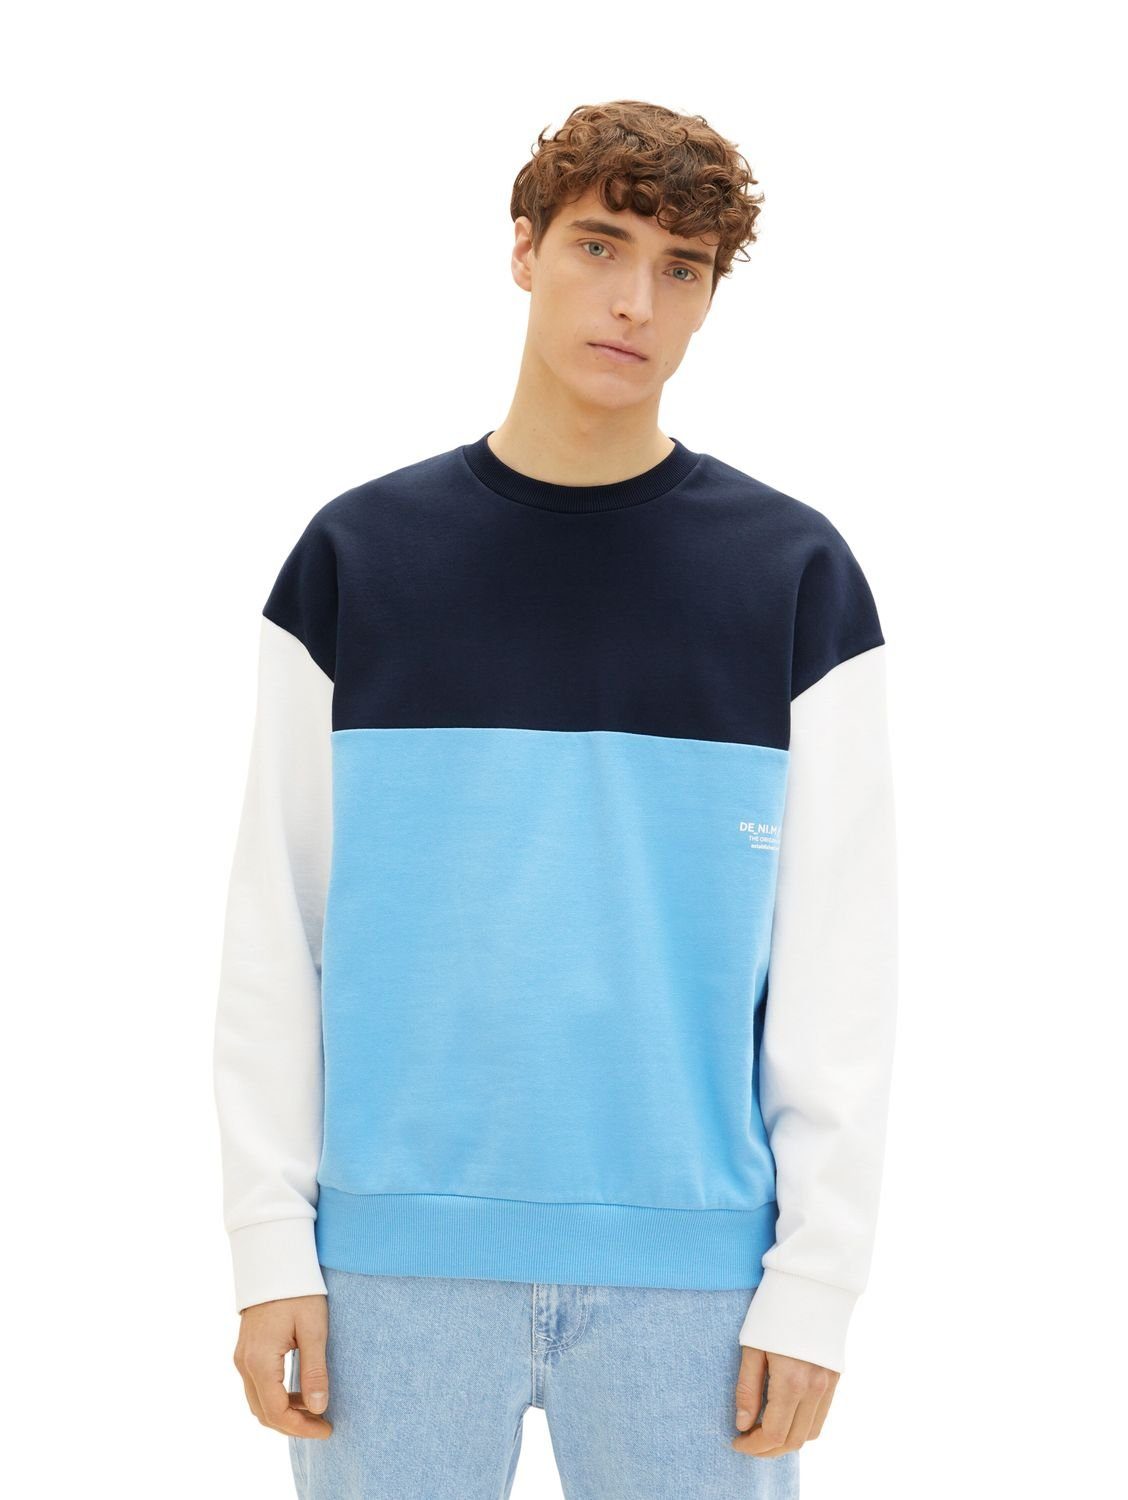 TOM TAILOR Denim Sweatshirt COLORBLOCK aus Baumwolle Rainy Sky Blue 18395